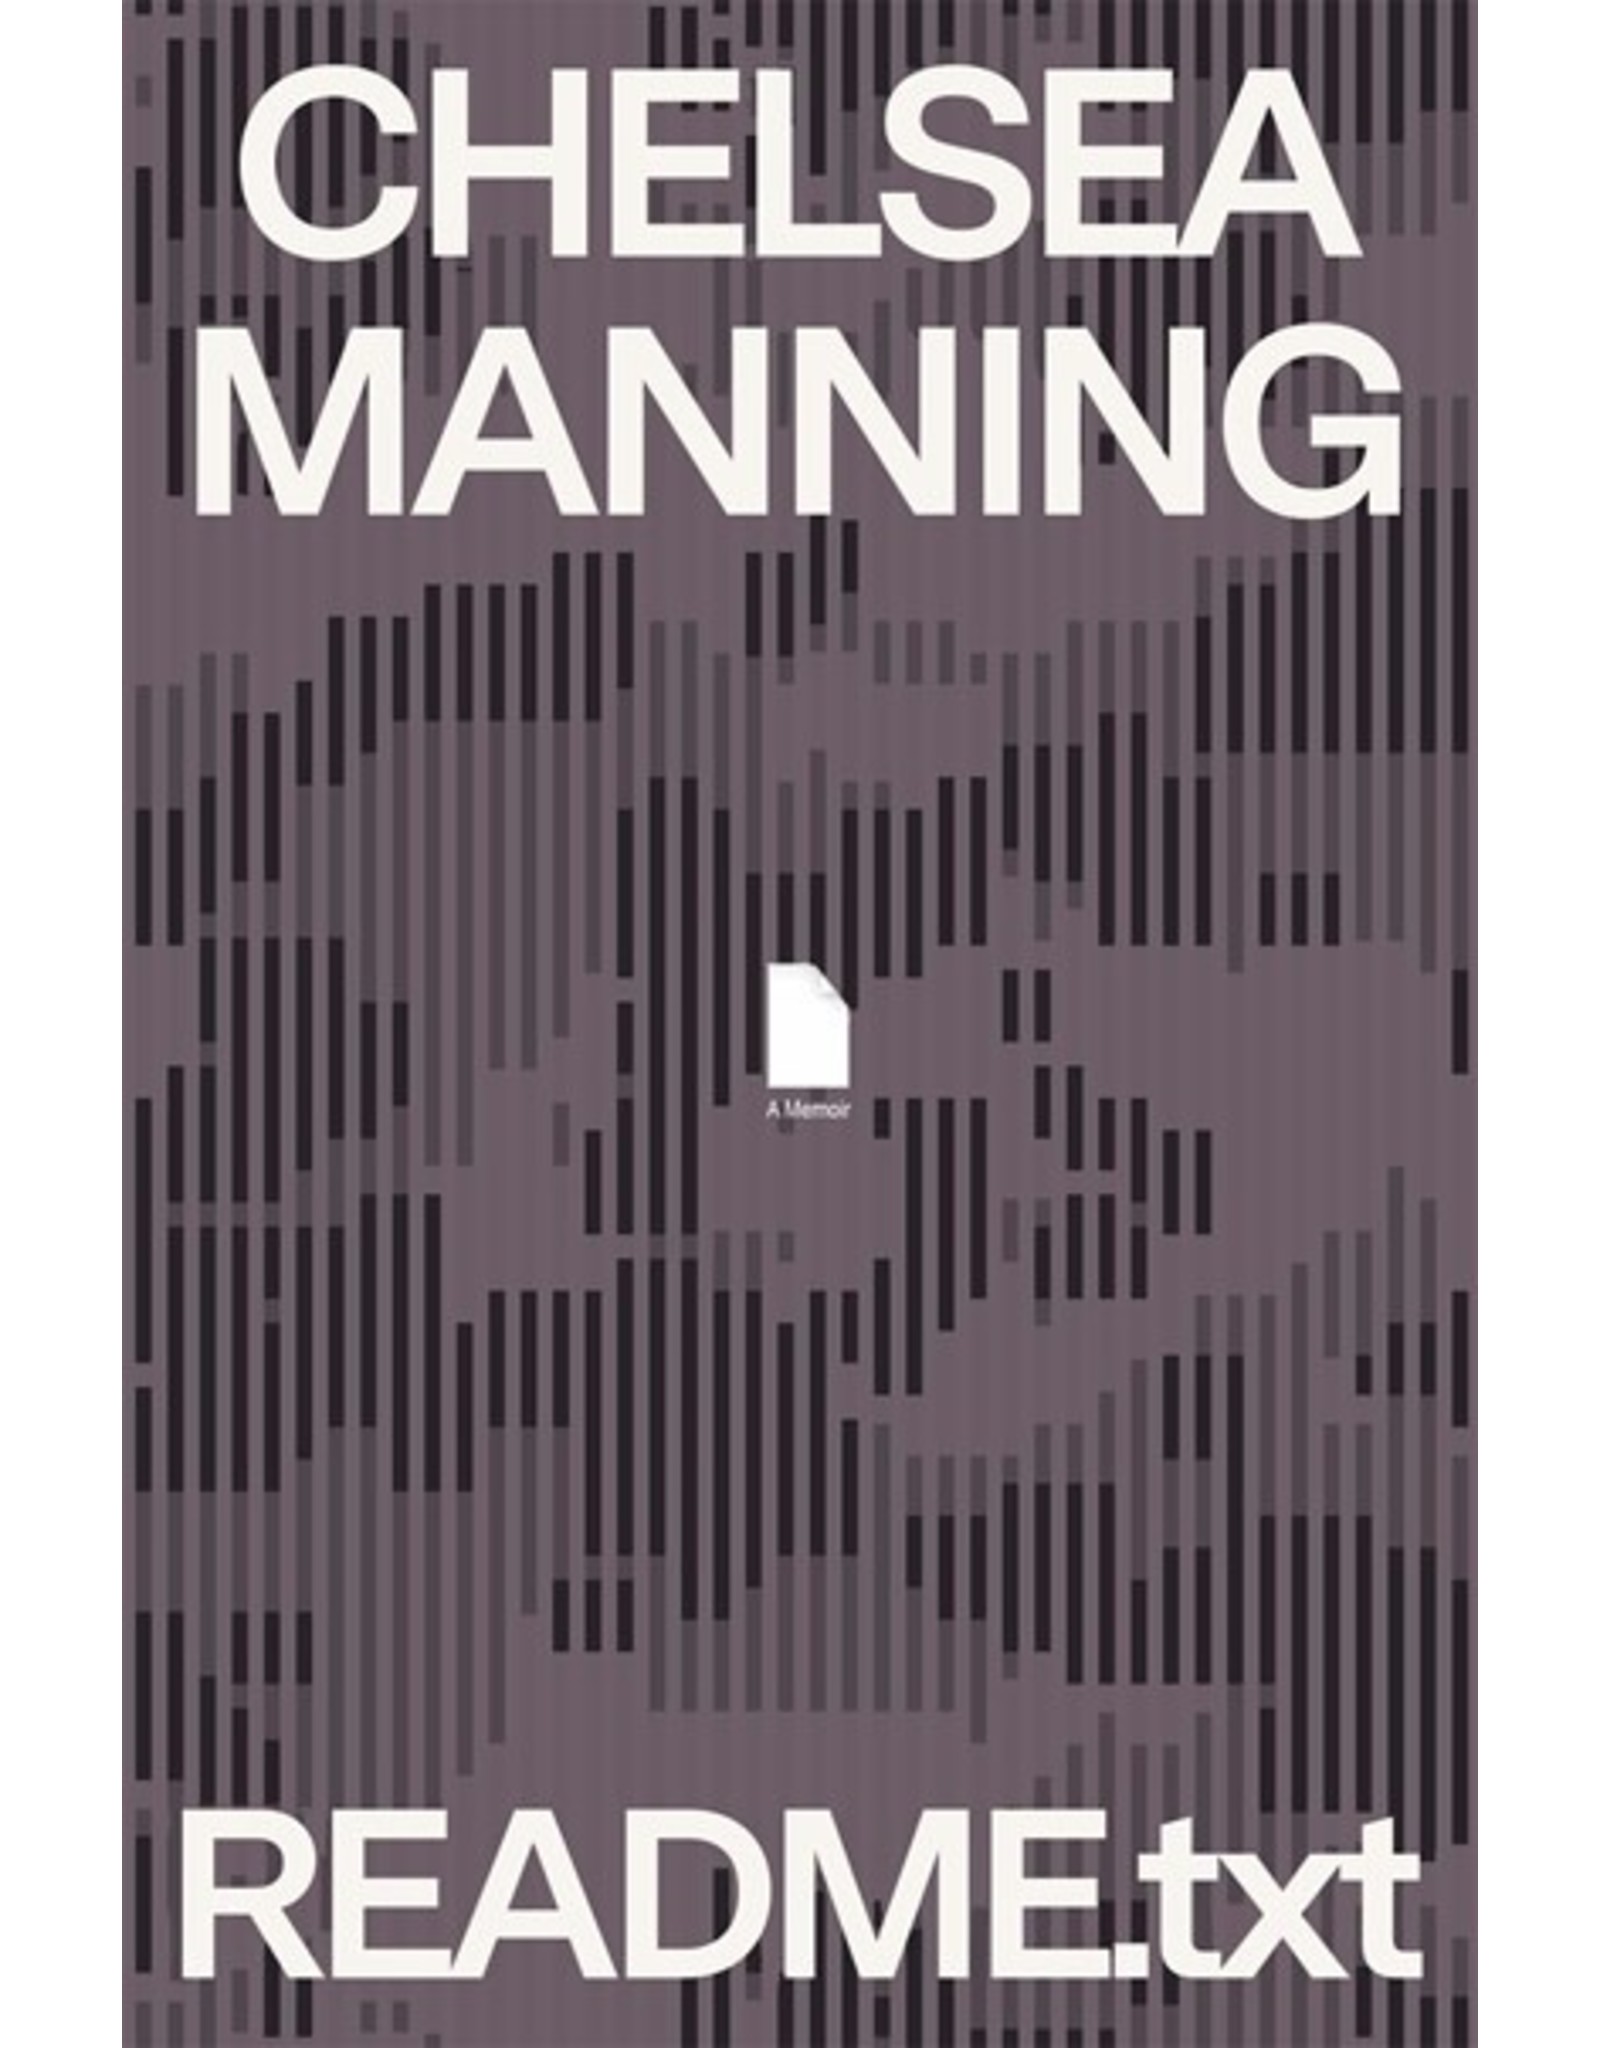 Books README.txt : A Memoir by Chelsea Manning